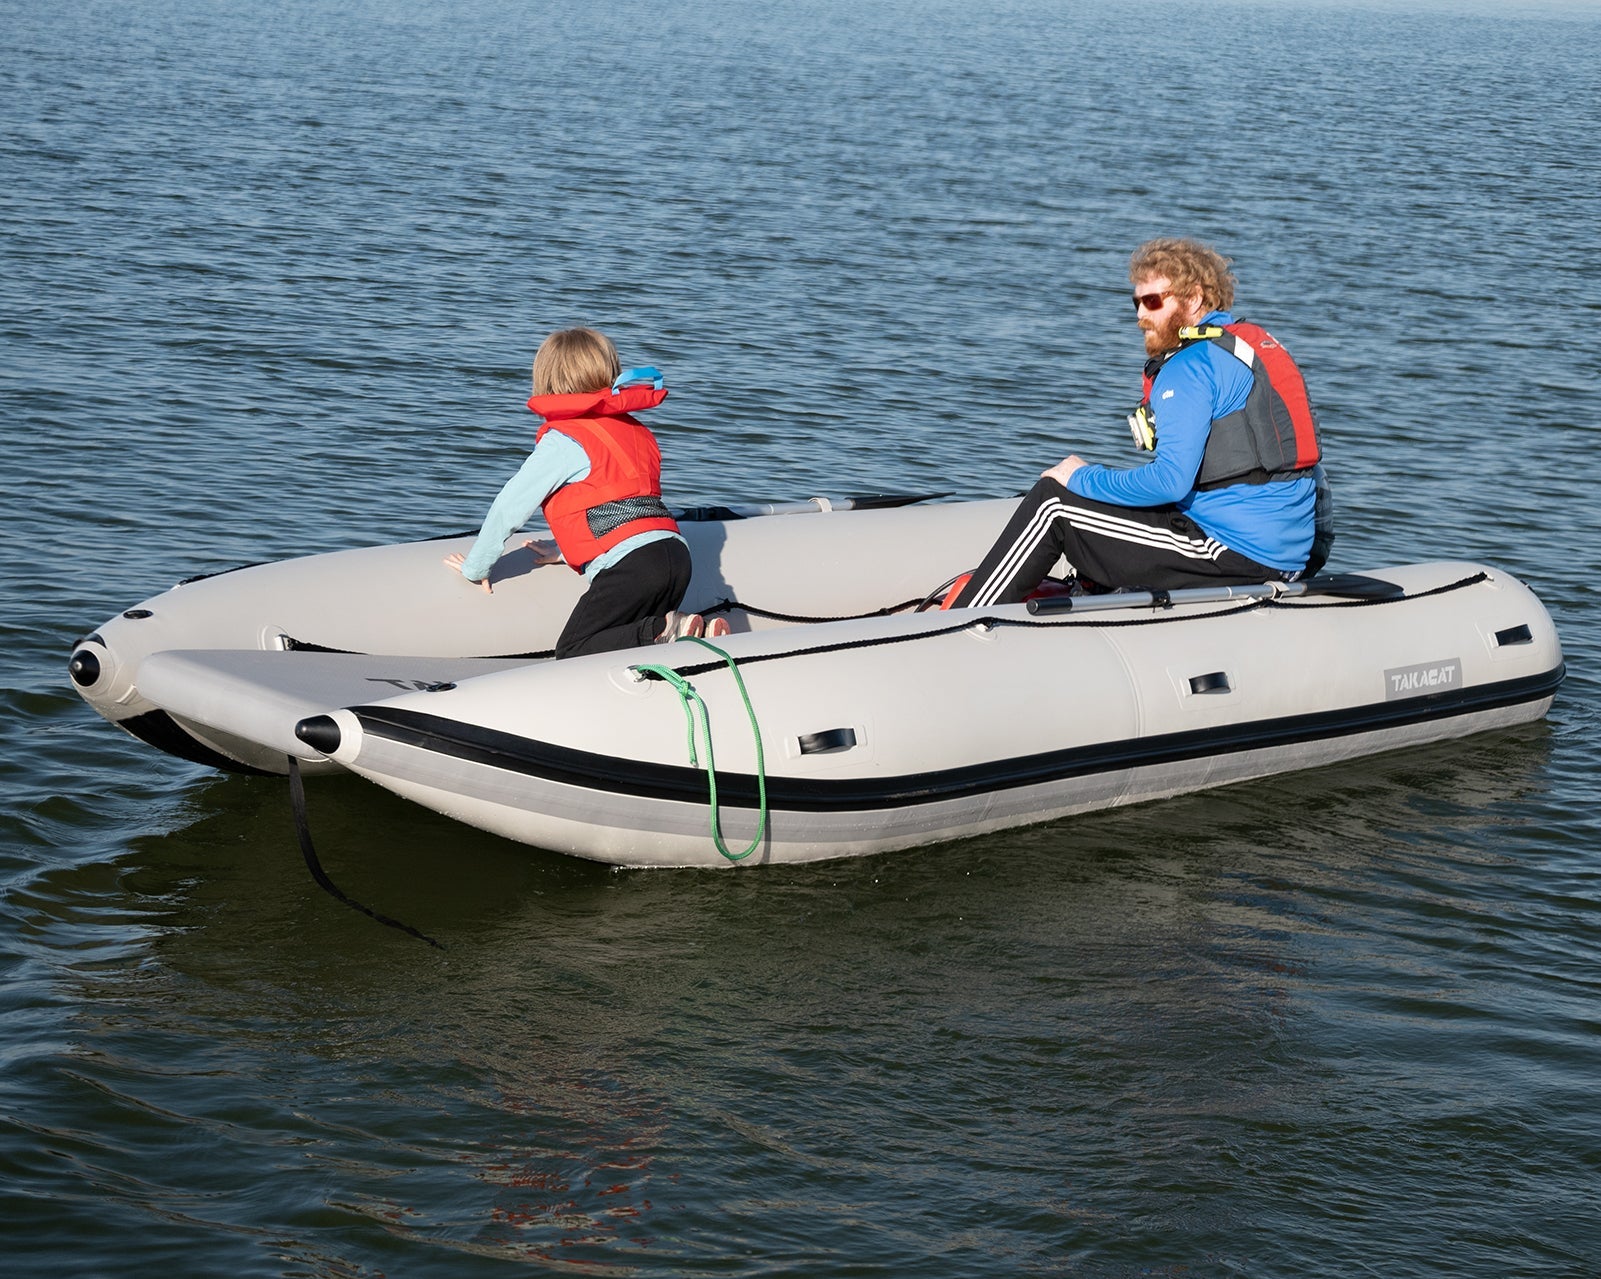 Takacat 460 LX Inflatable Catamaran